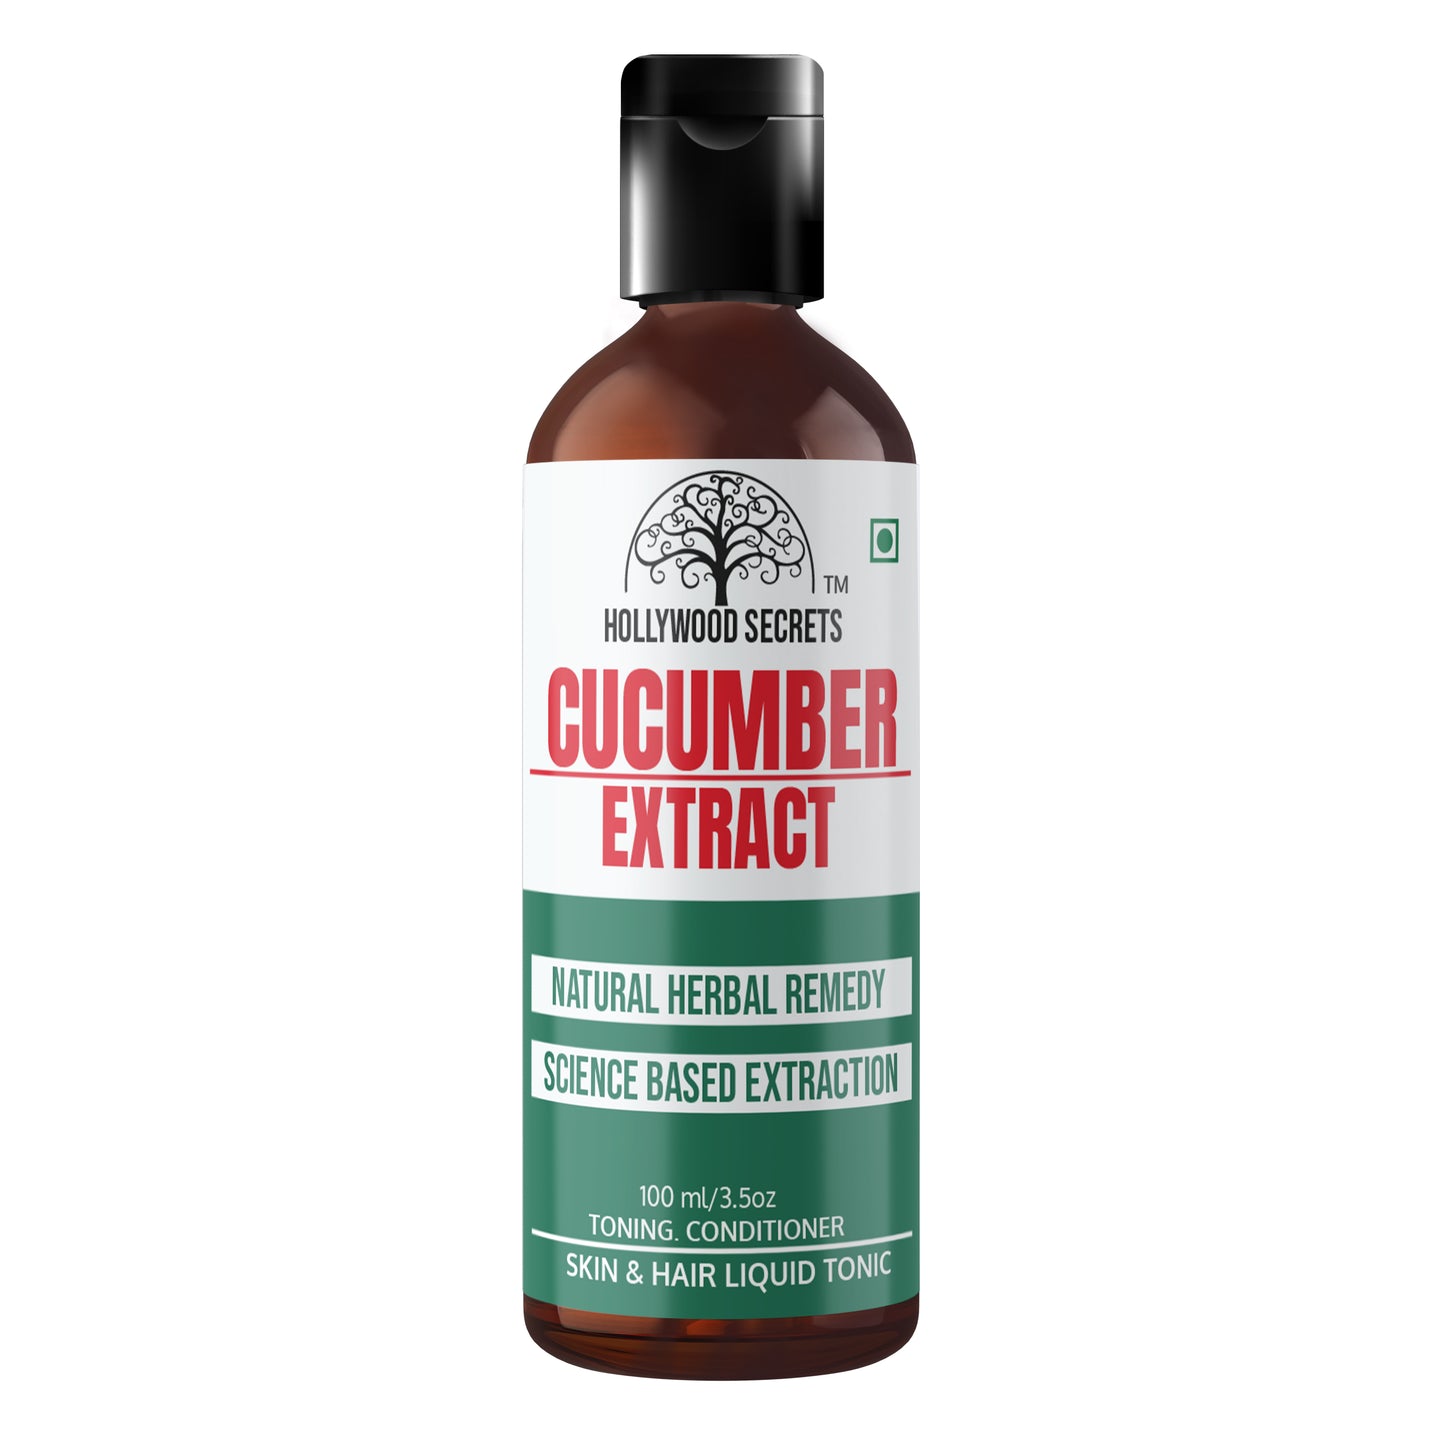 Pure 85% Cucumber Liquid Extract 100ml Hollywood Secrets